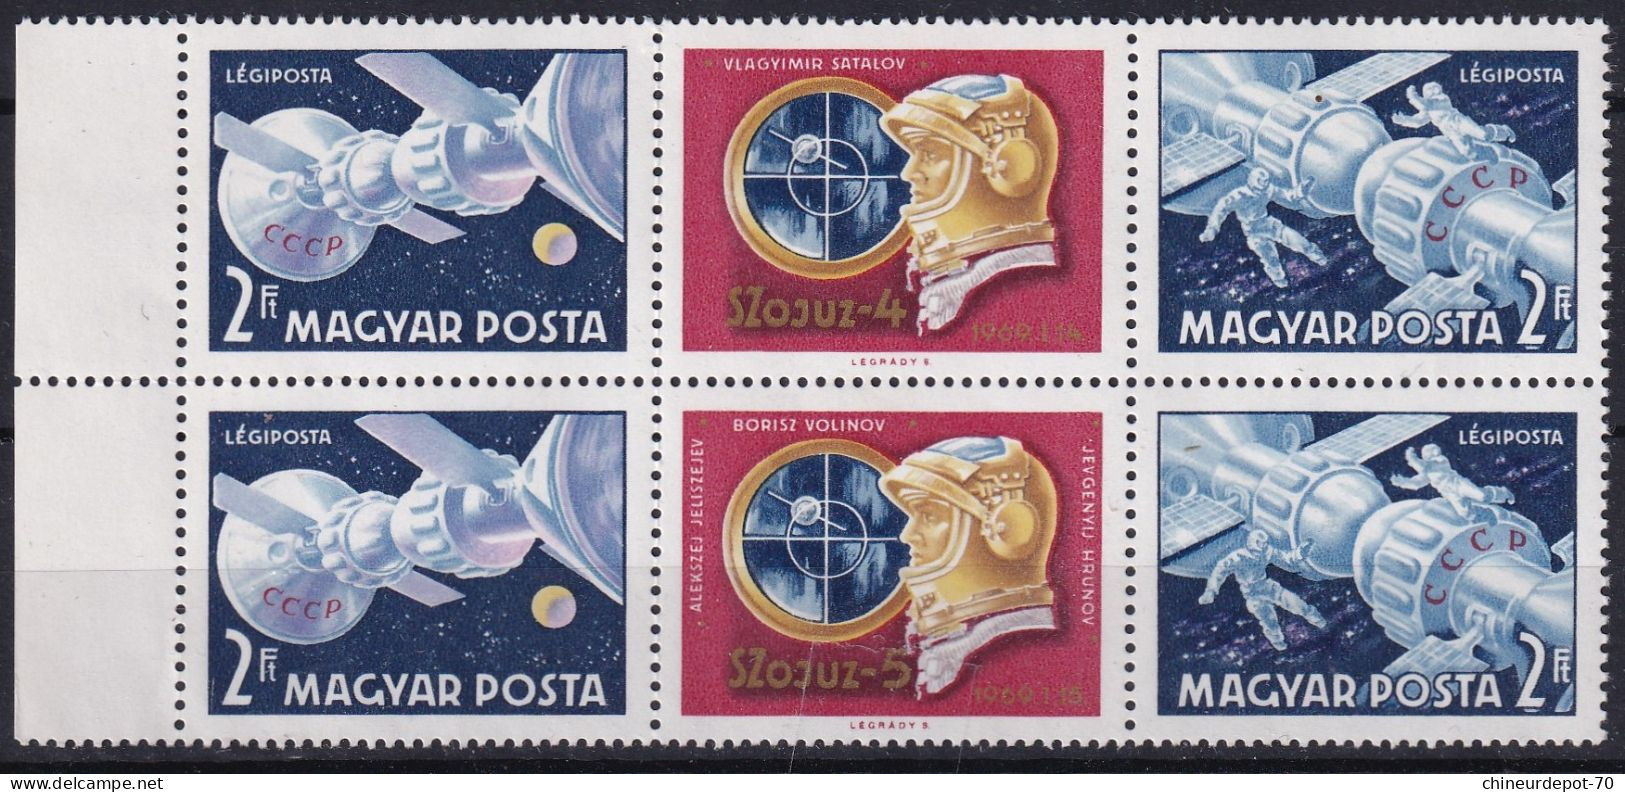 Légiposta Magyar Posta Hongrie Szojuz 4 Neufs Sans Charnières ** - Unused Stamps